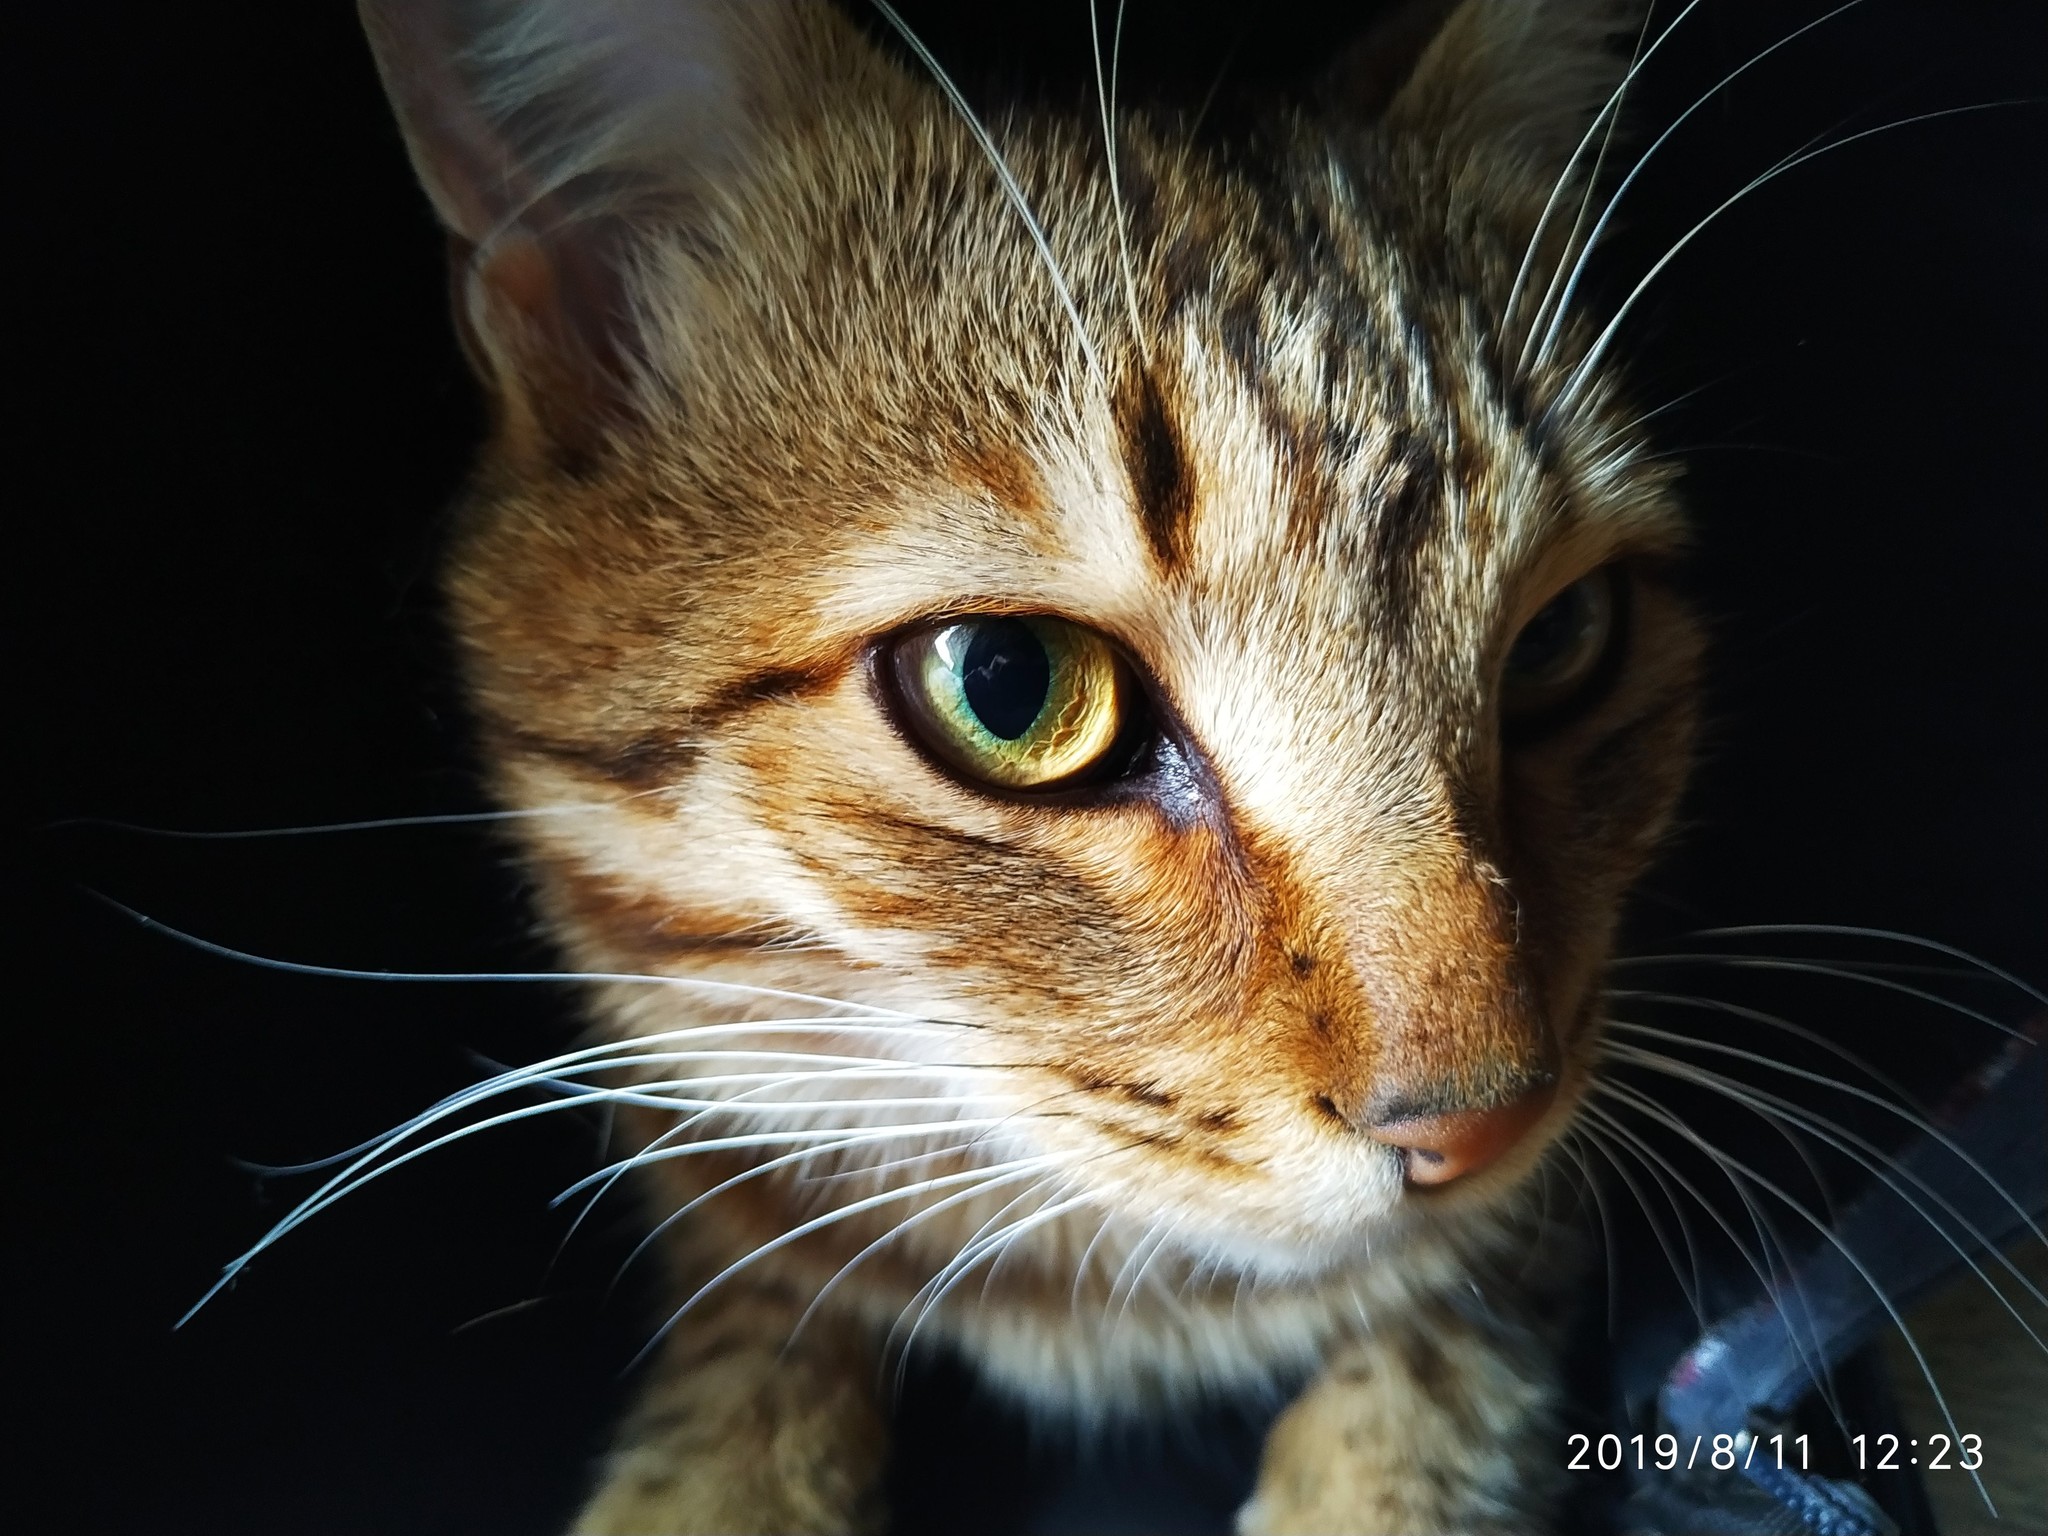 Mustachioed-striped))) - My, Catomafia, cat, The photo, Усы